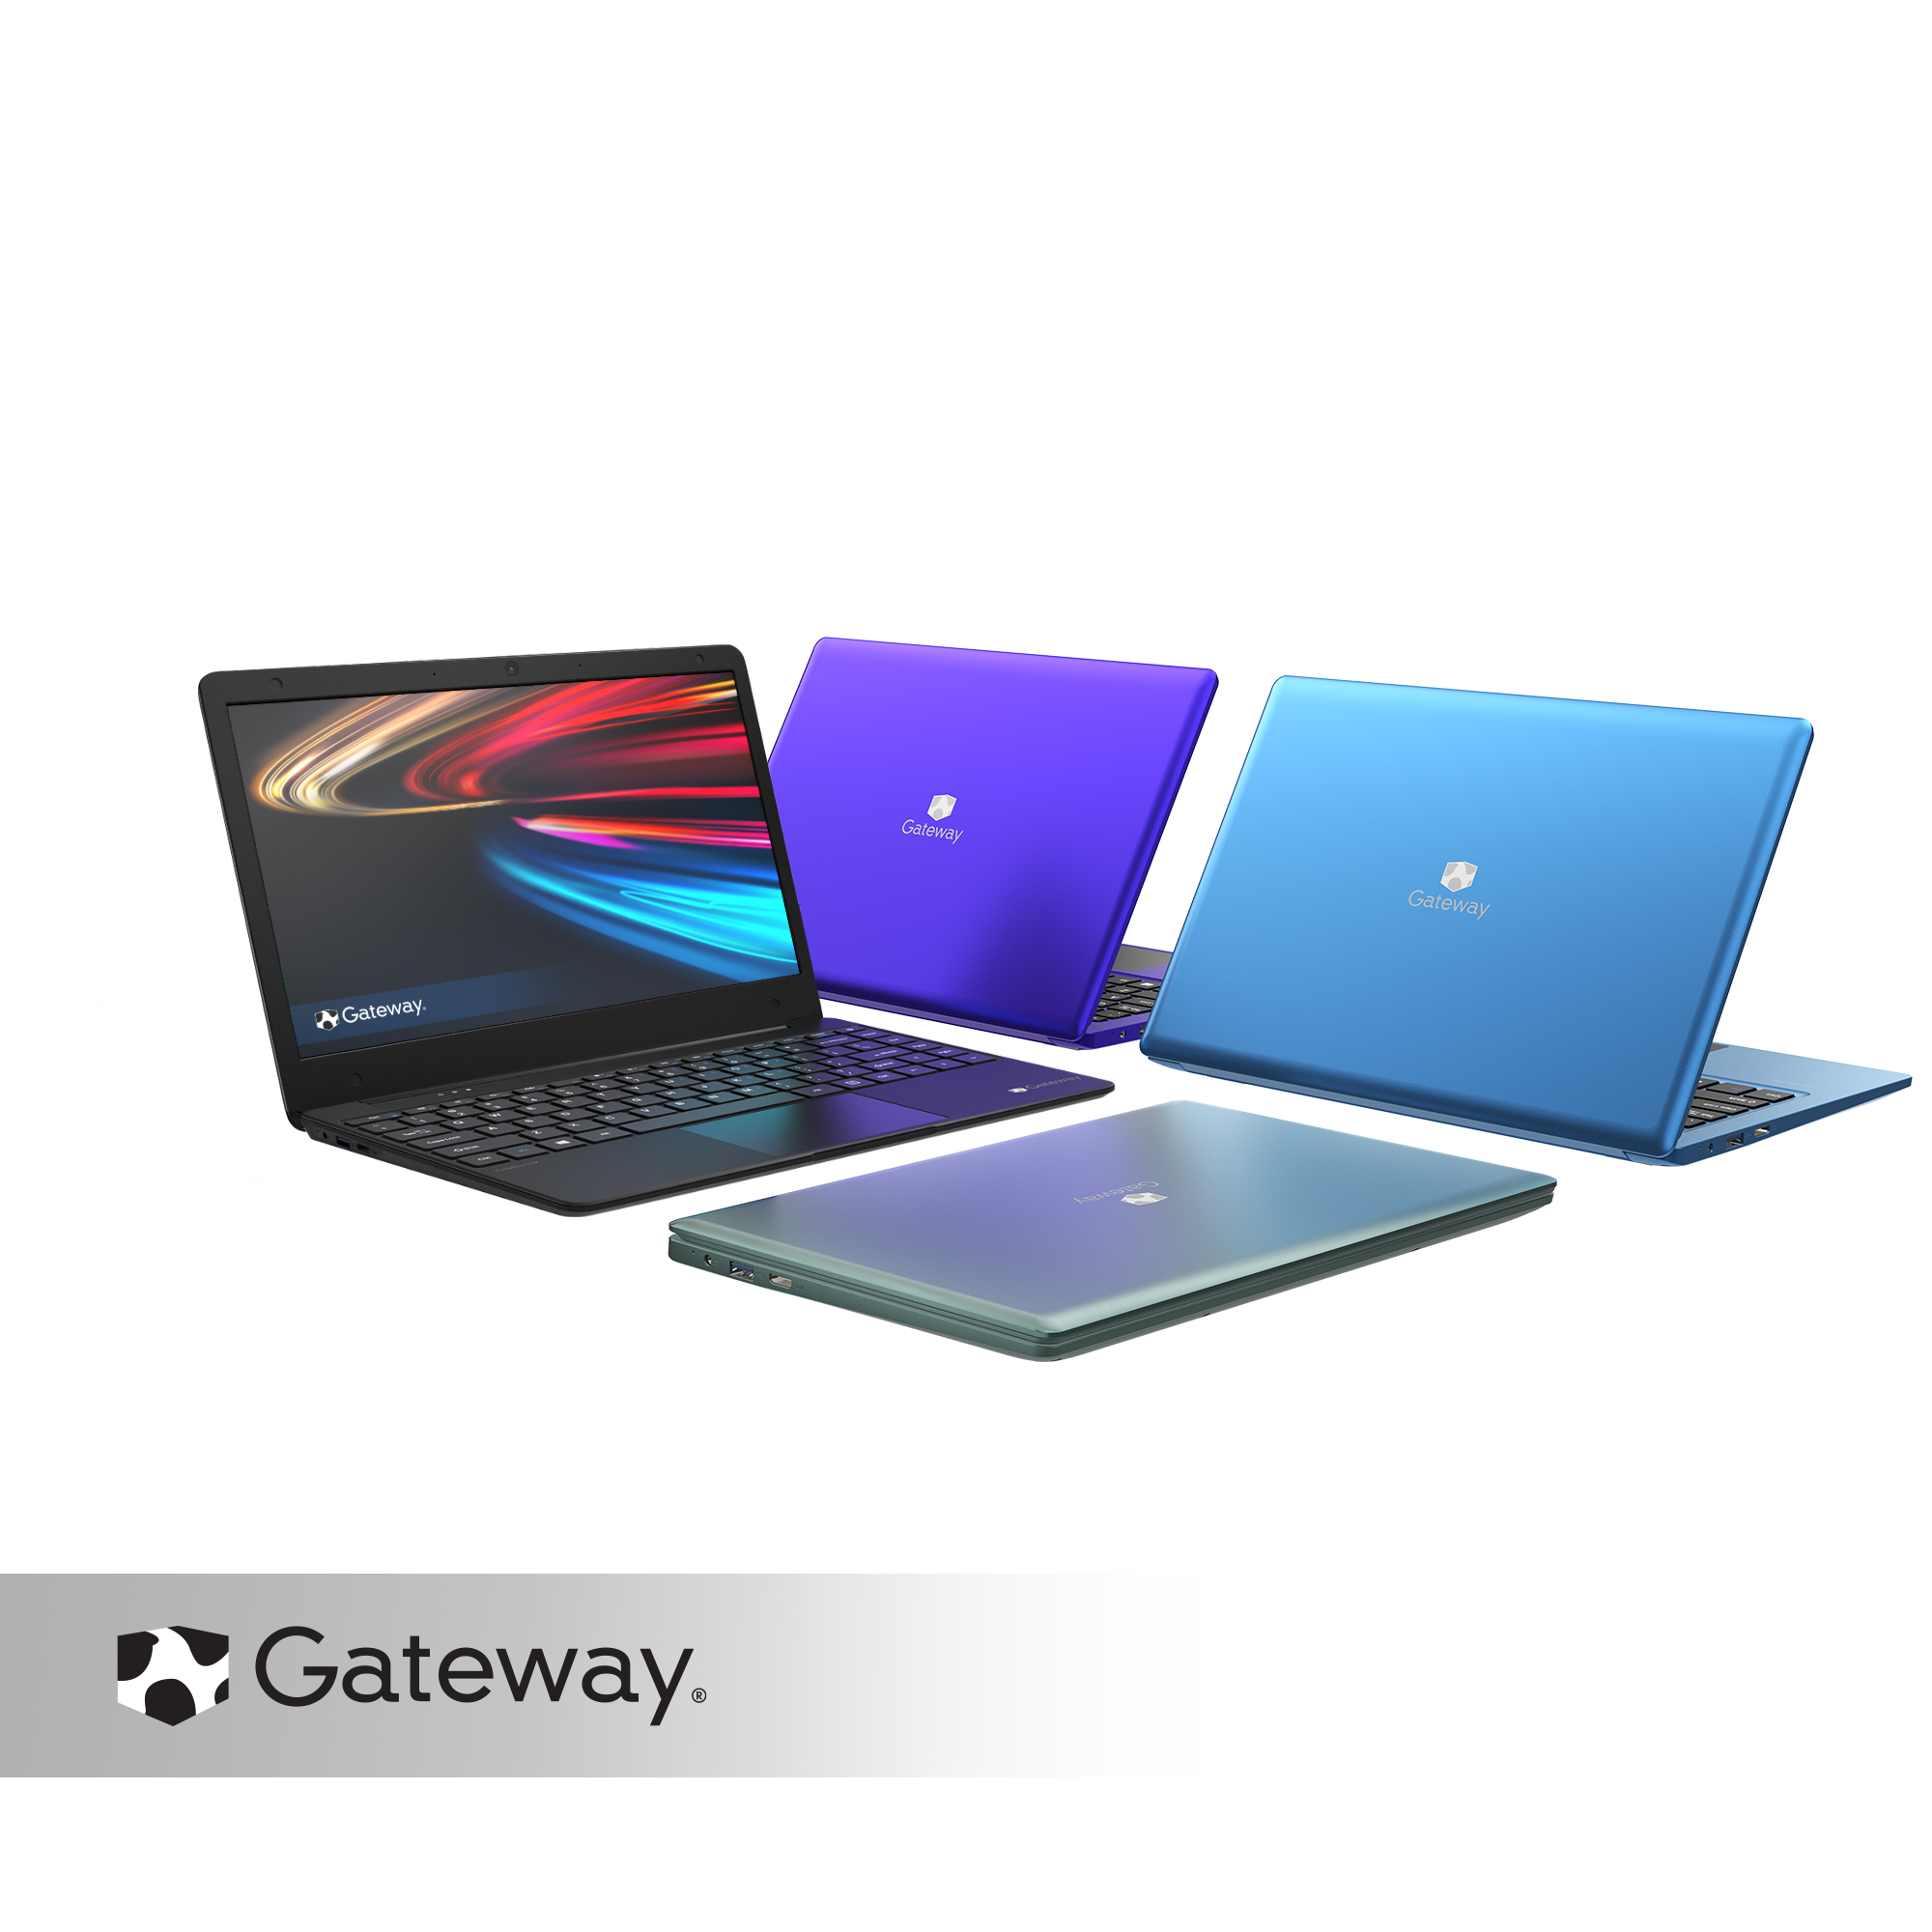 Gateway 14.1" FHD Ultra Slim Notebook, Intel Celeron, 4GB RAM, 64GB Storage, Tuned by THX Display & Audio, Mini HDMI, Webcam, Windows 10 S, Microsoft 365 Personal 1-Year Included - image 1 of 4